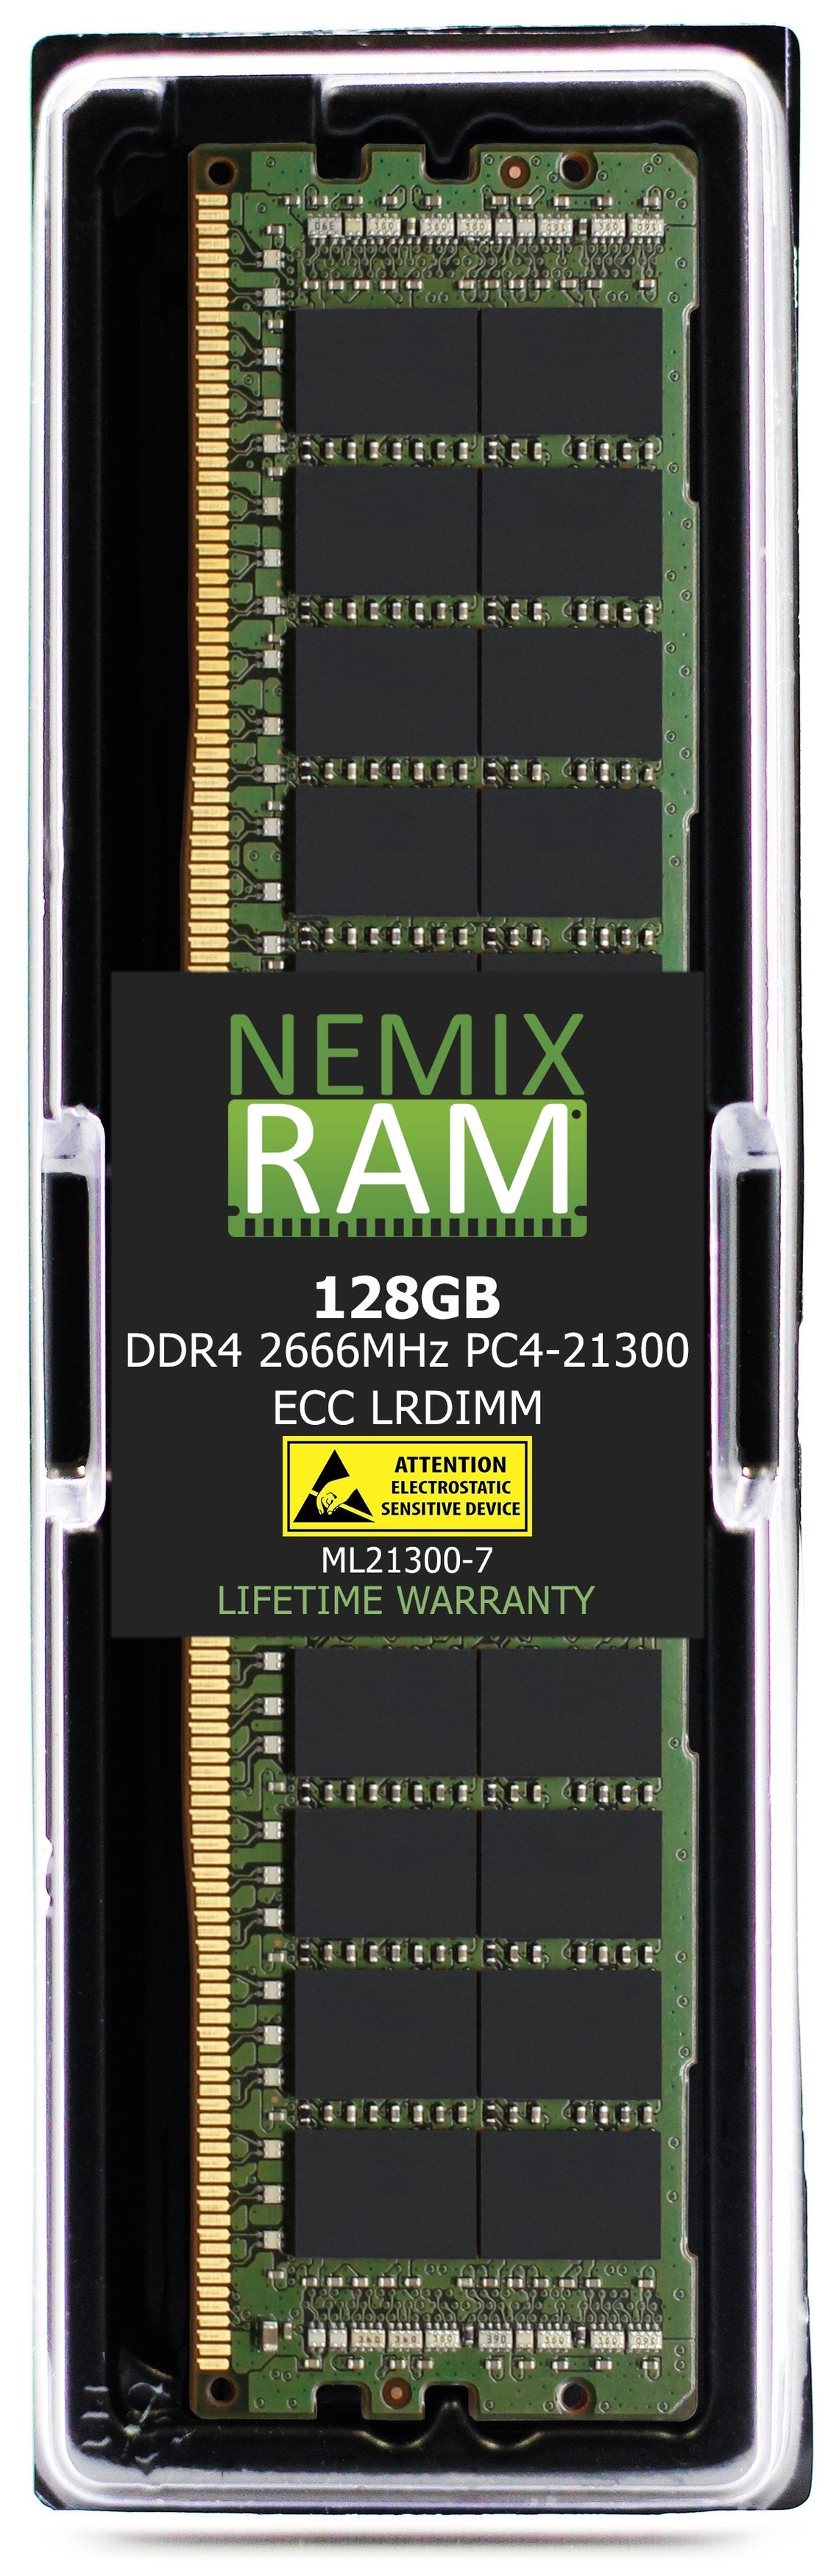 NEC Express5800 R120h Memory Module N8102-713 128GBDDR4 2666MHZ PC4-21300 LRDIMM